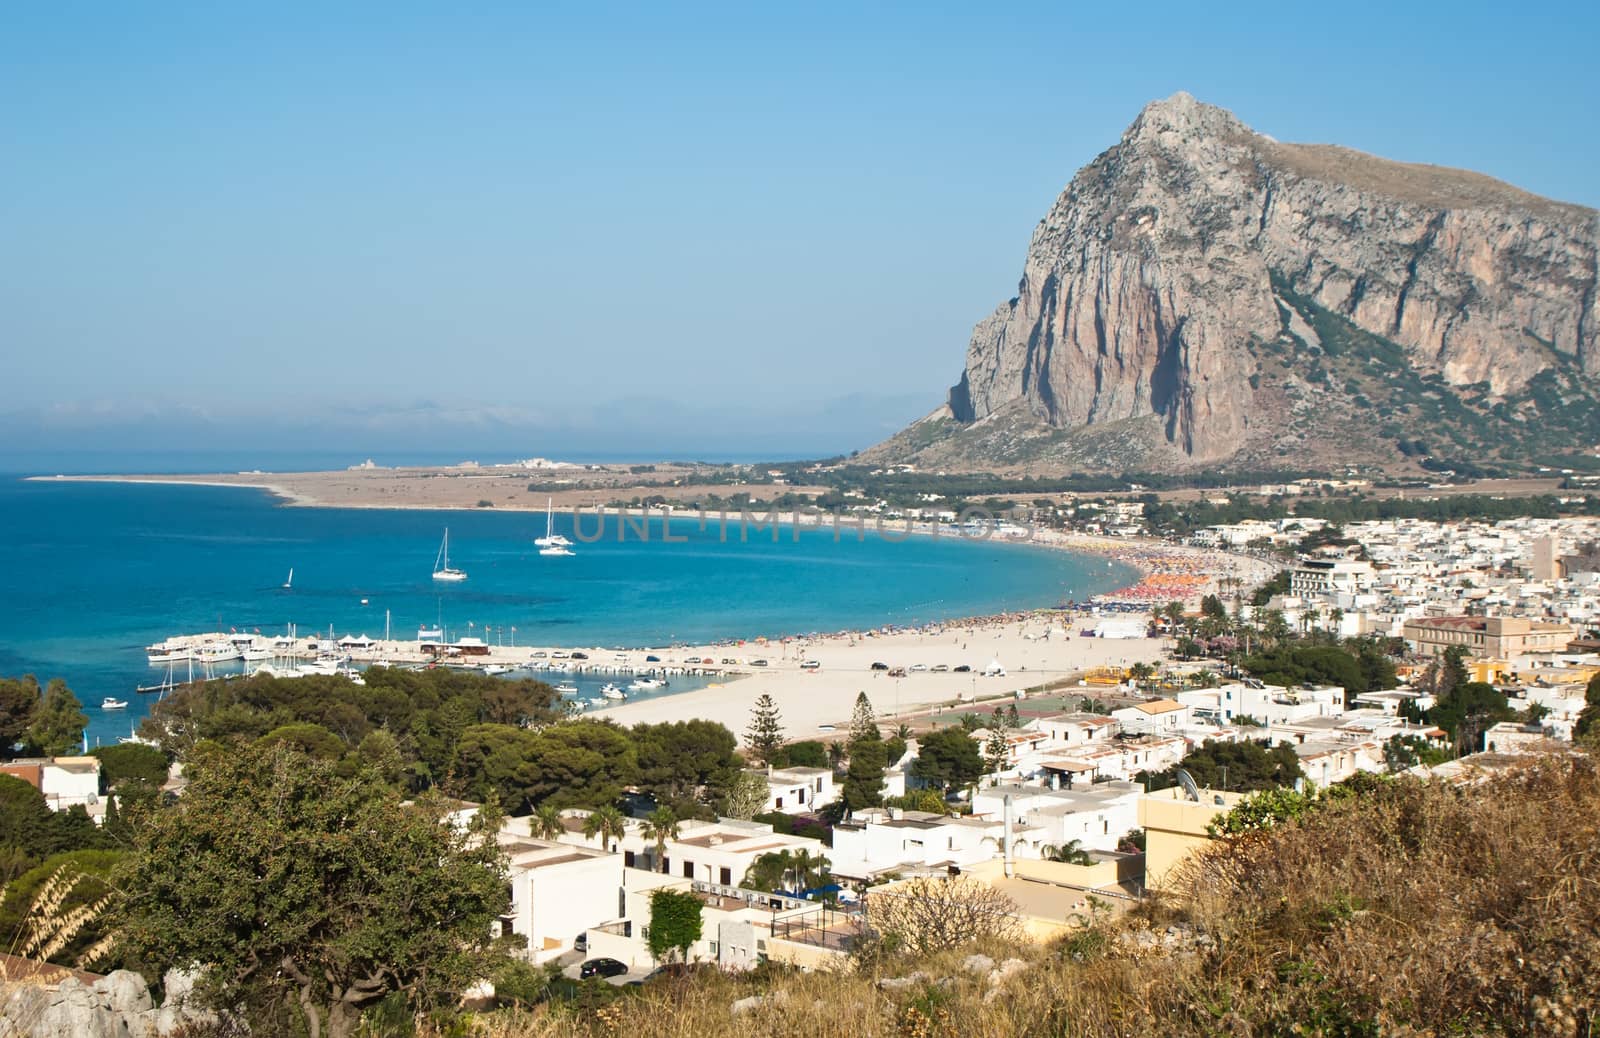 San Vito Lo Capo town in Sicily by gandolfocannatella